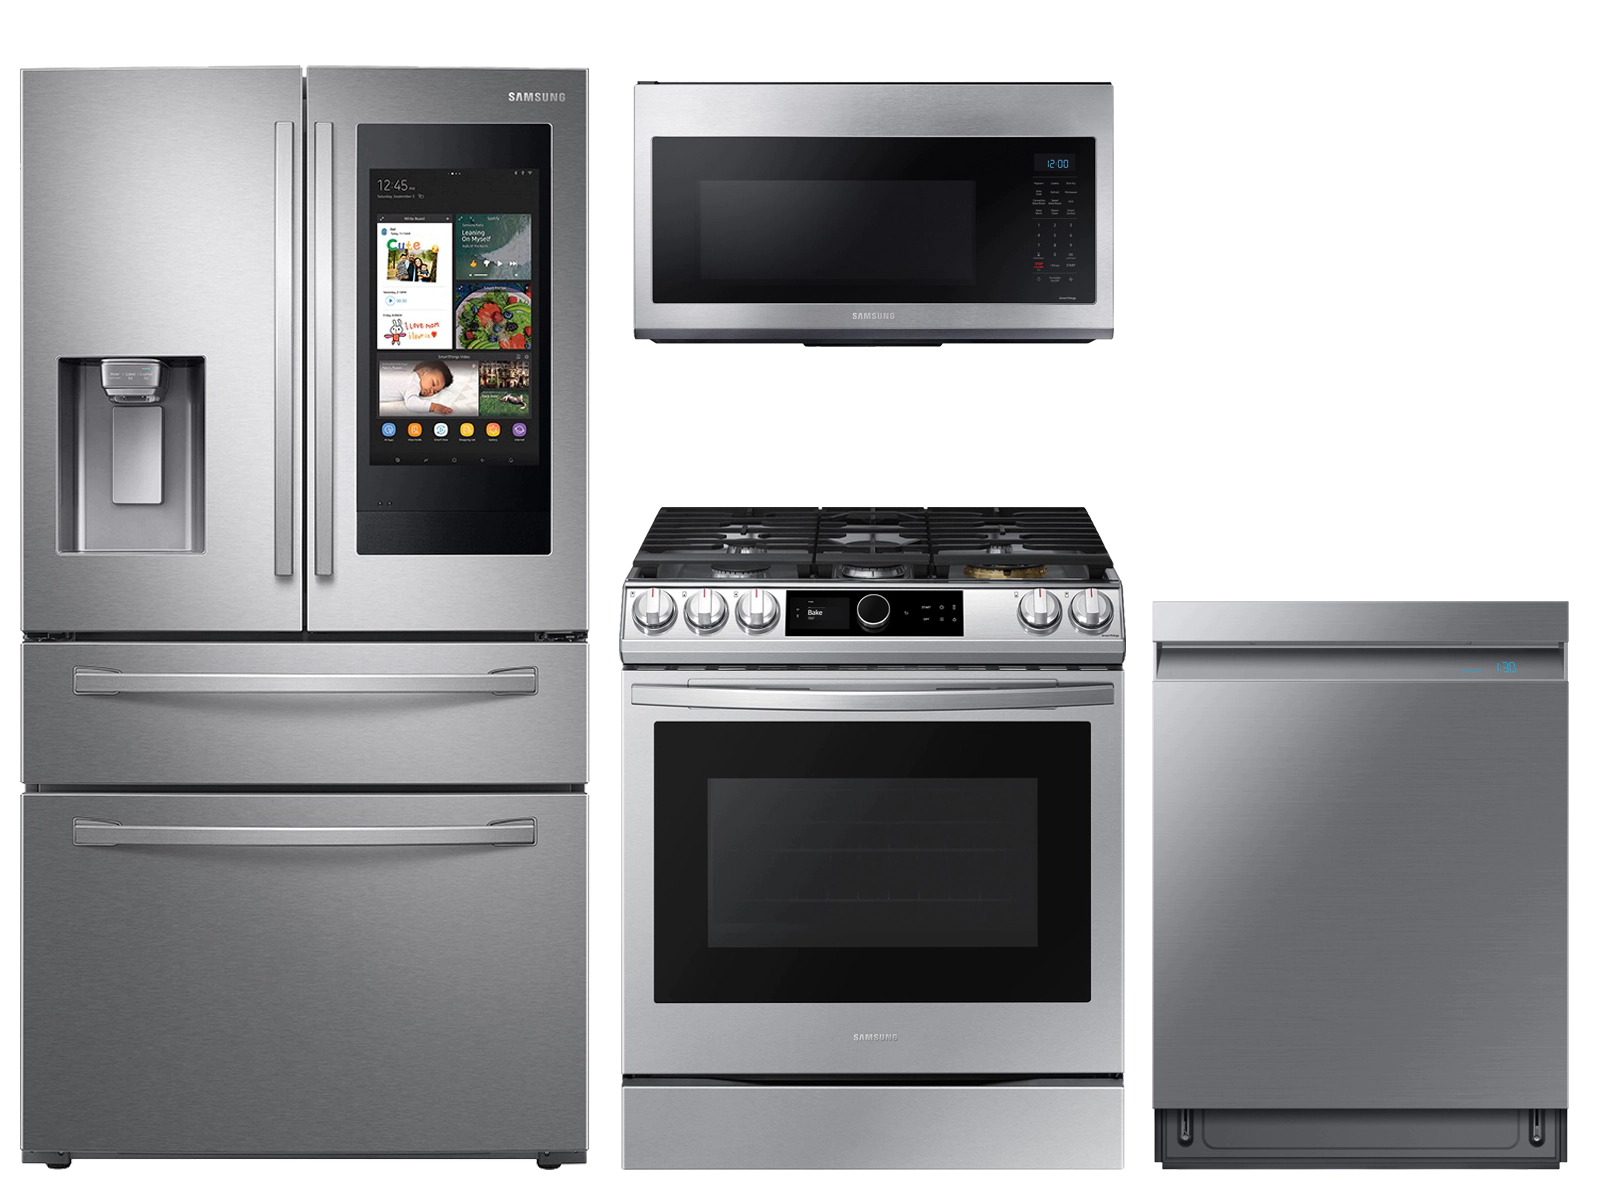 28 cu. ft. Family HubTM 4-door refrigerator, gas range, microwave and Smart Linear dishwasher package